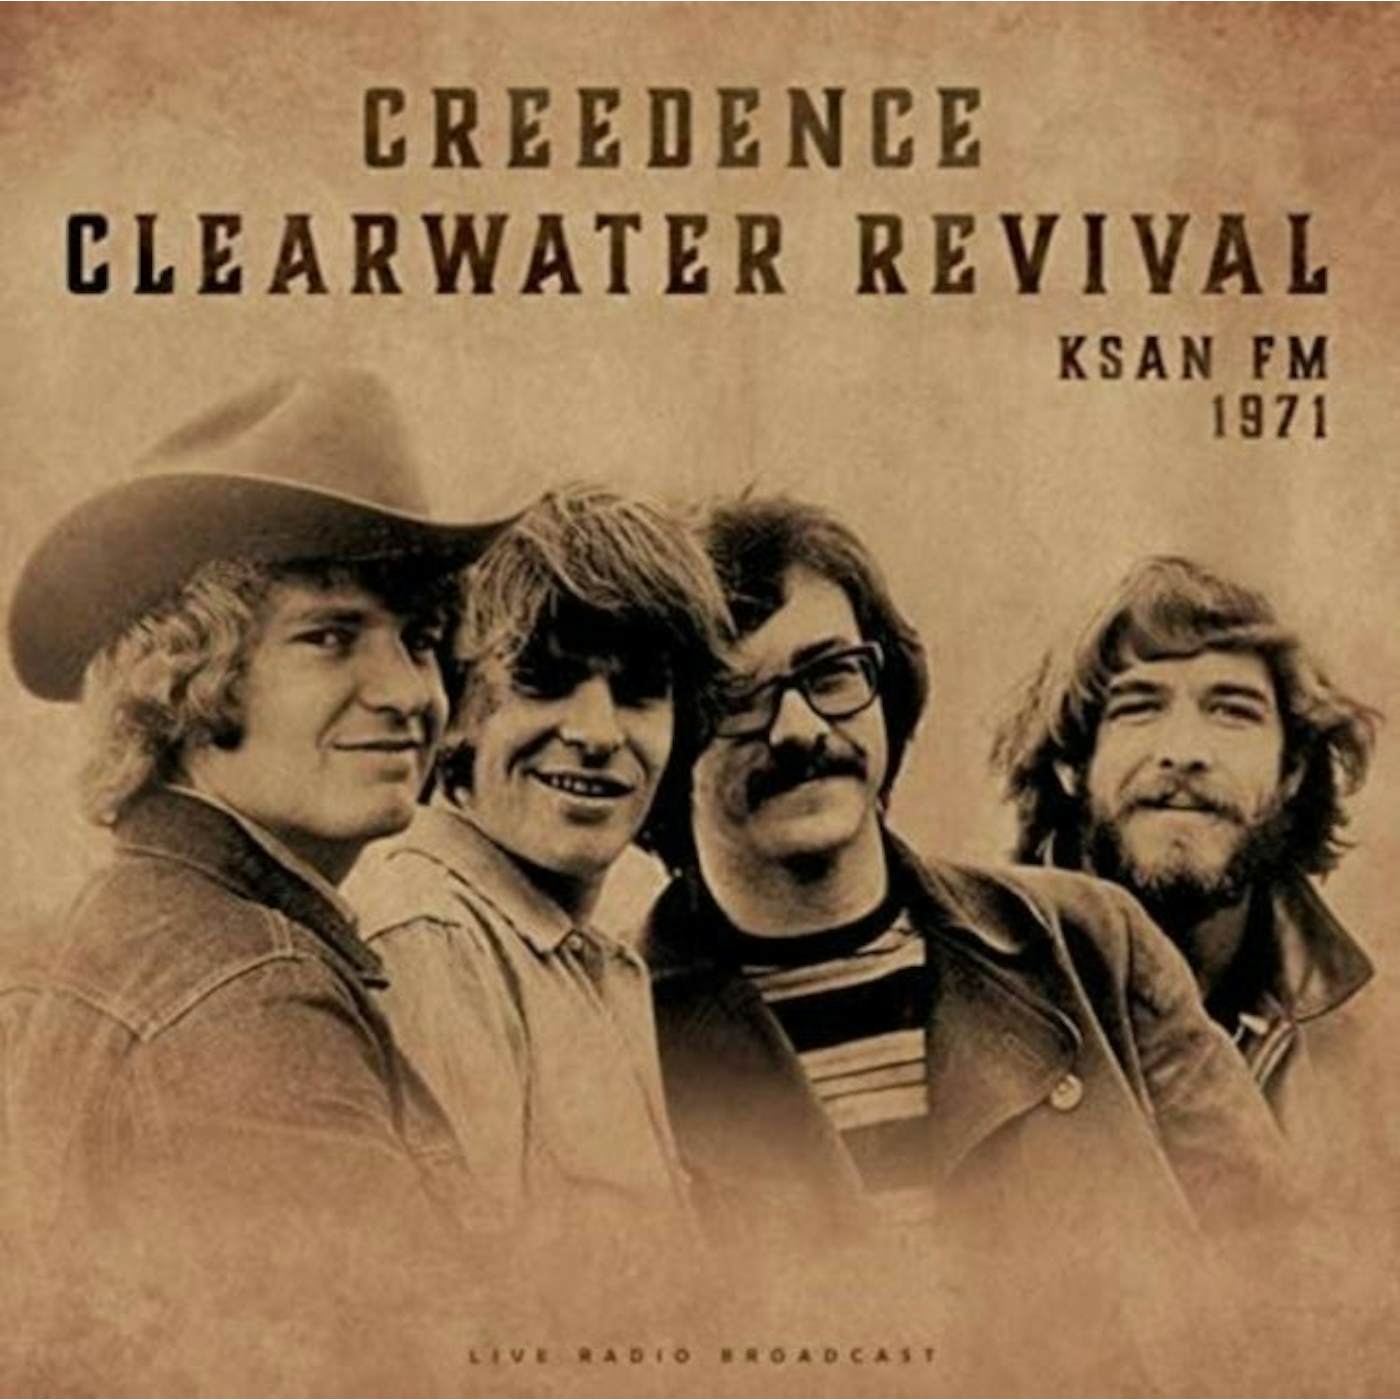 Creedence Clearwater Revival LP Vinyl Record - KSAN FM 19 71